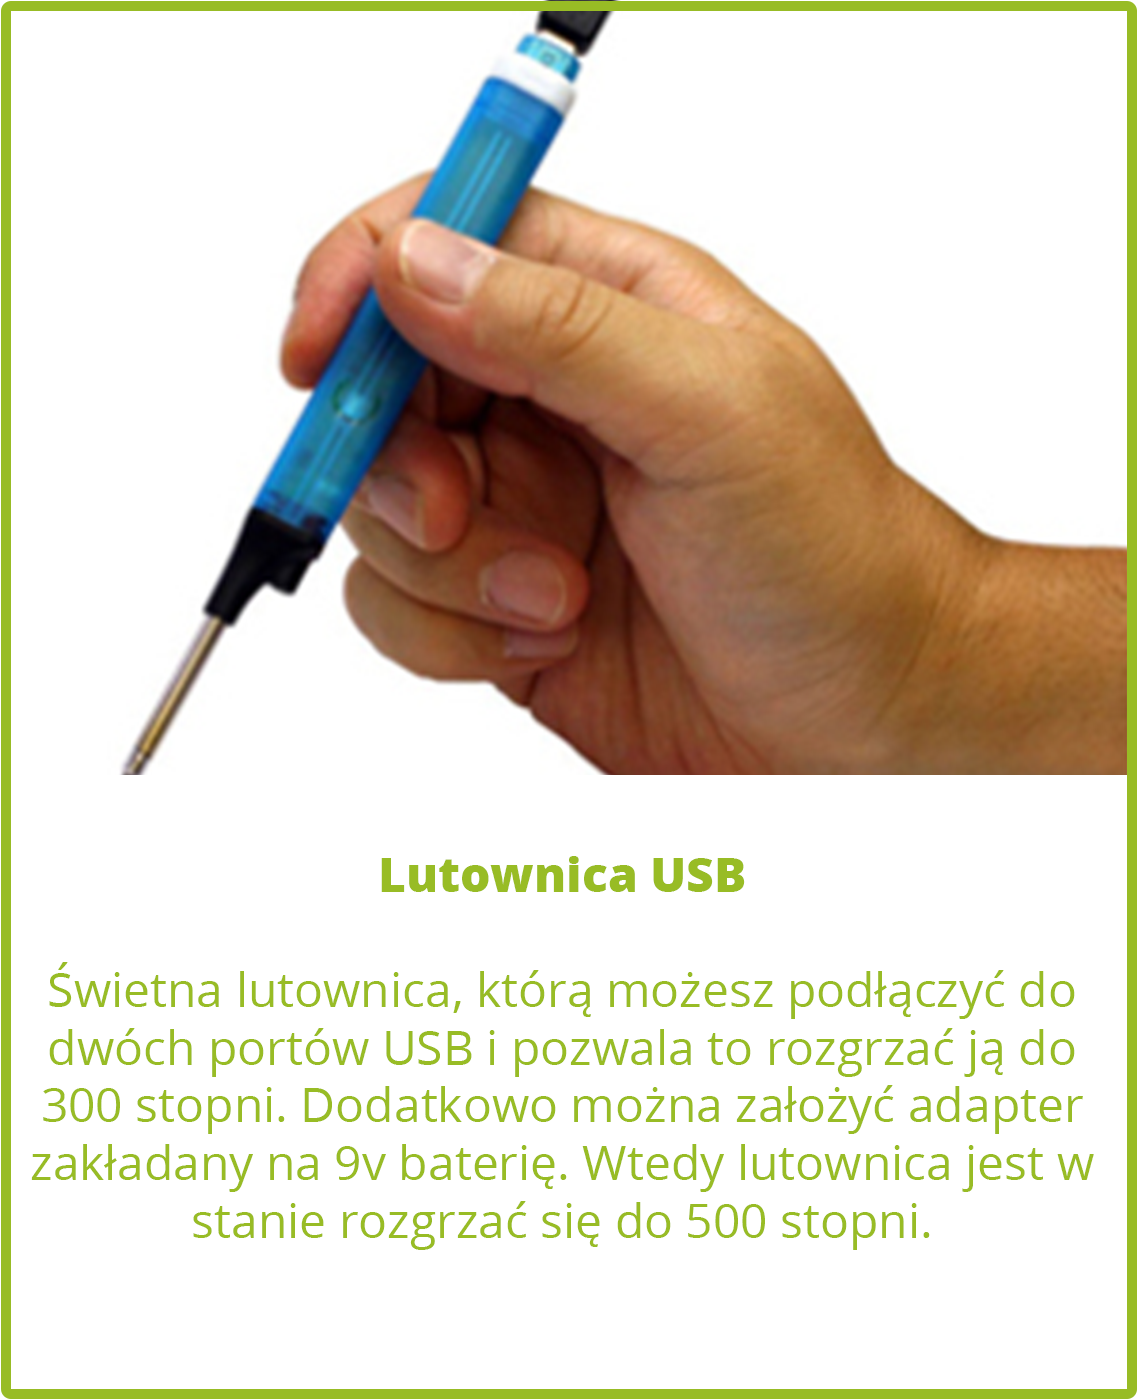 Lutownica USB